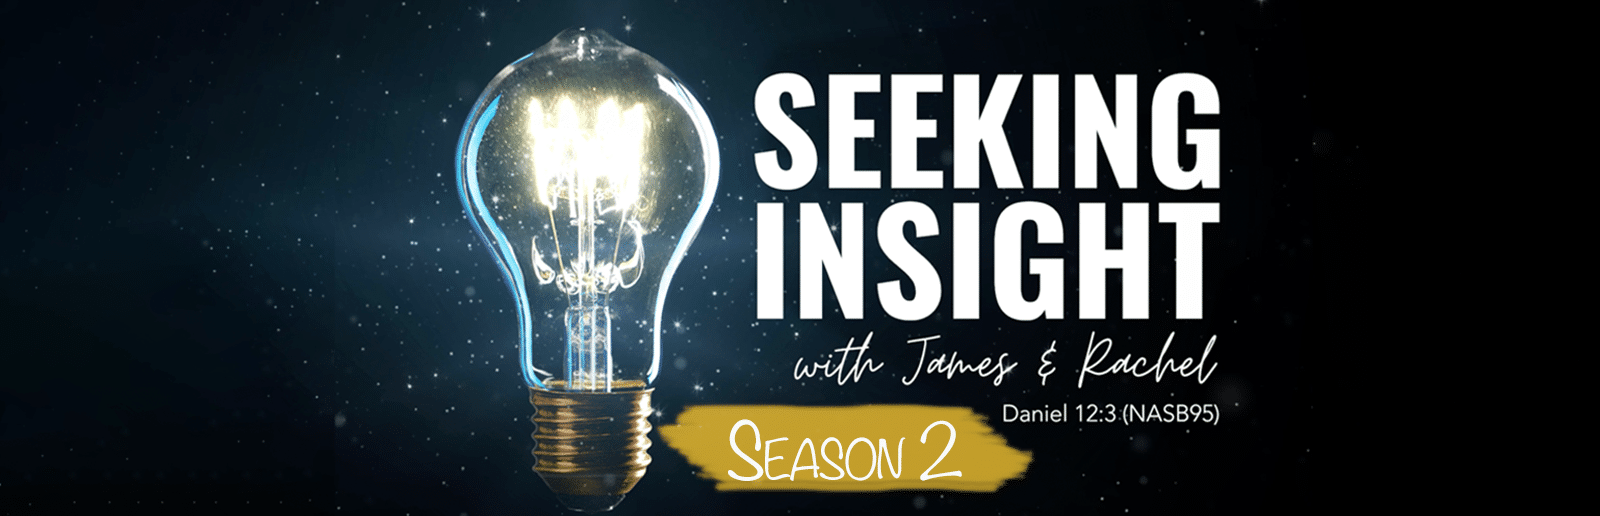 Seeking INSIGHT - Season 2